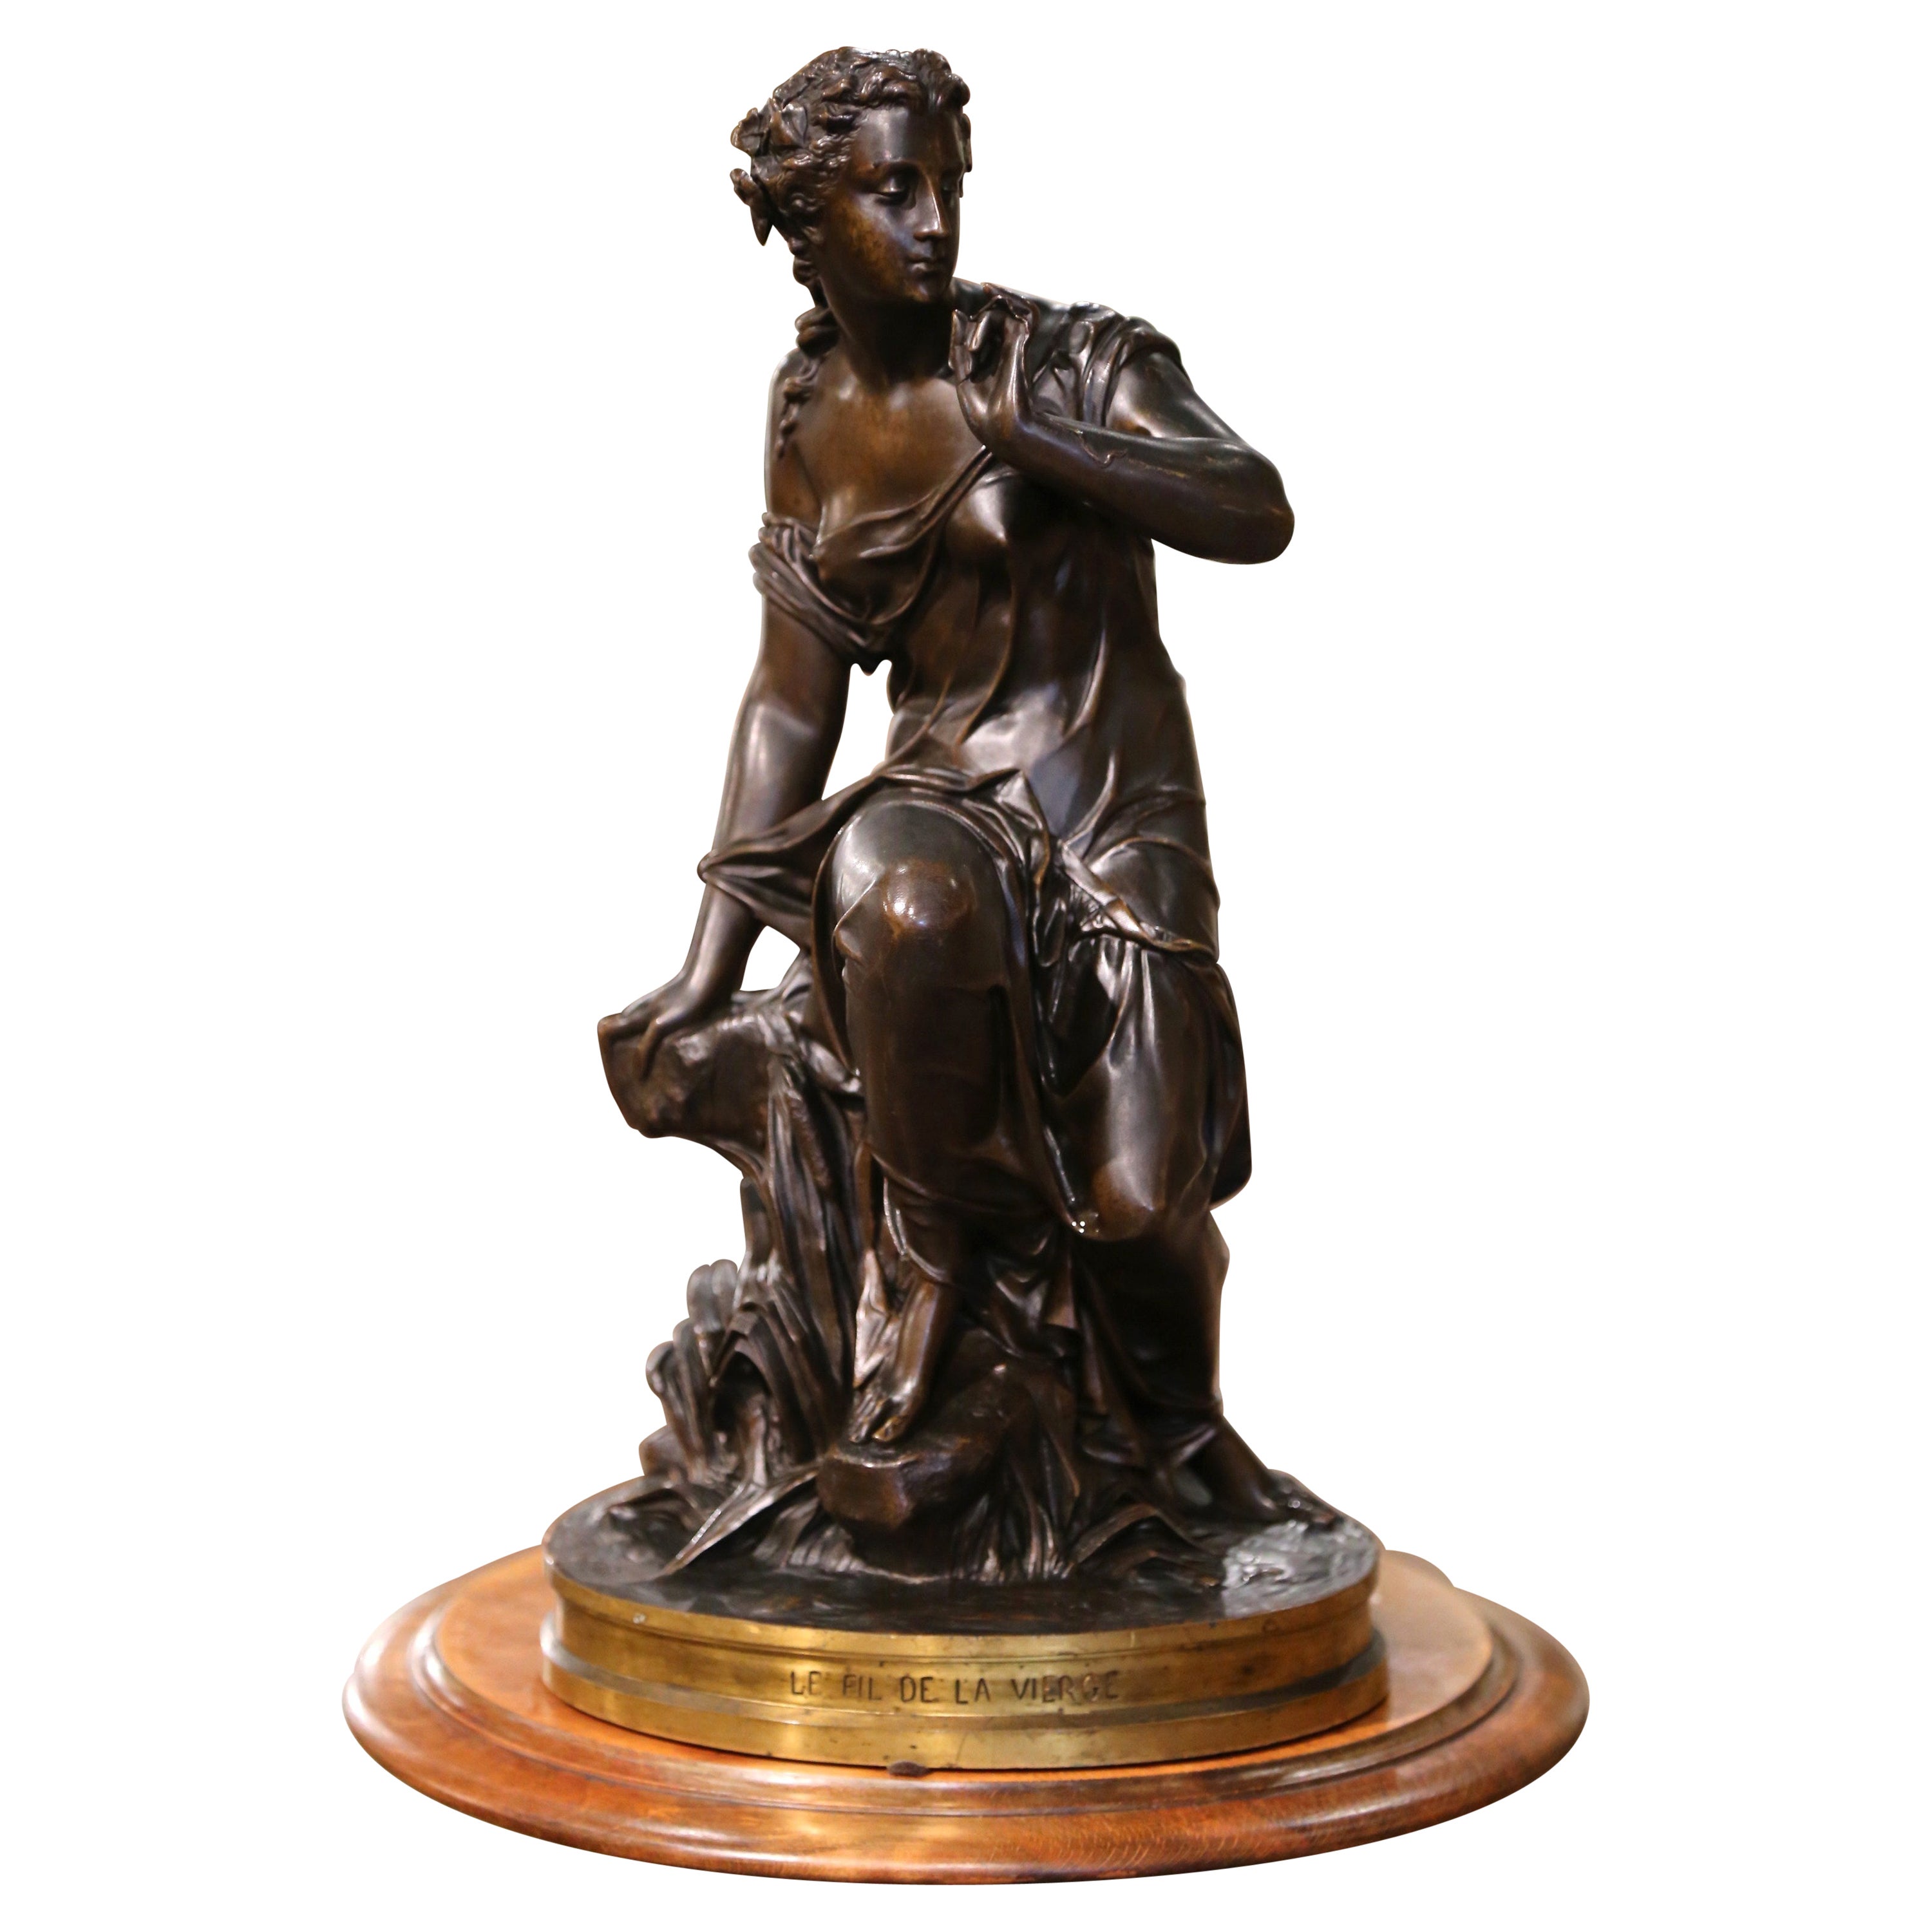 19th Century French Bronze & Gilt Figure "Le Fil de la Vierge" Signed E. Hebert For Sale